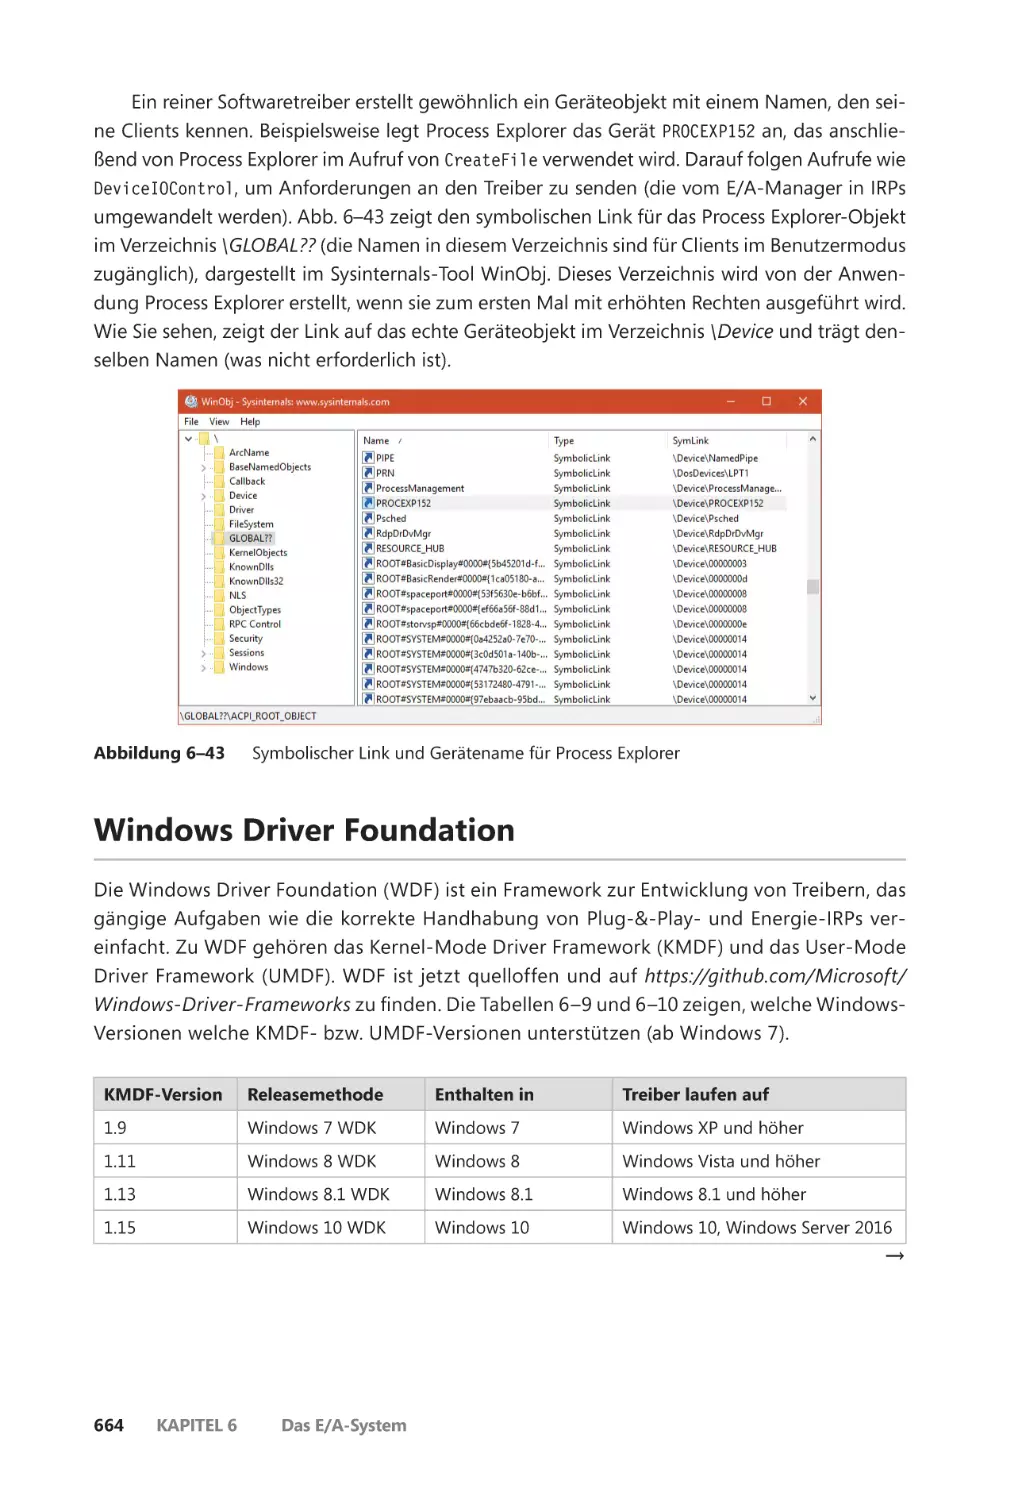 Windows Driver Foundation